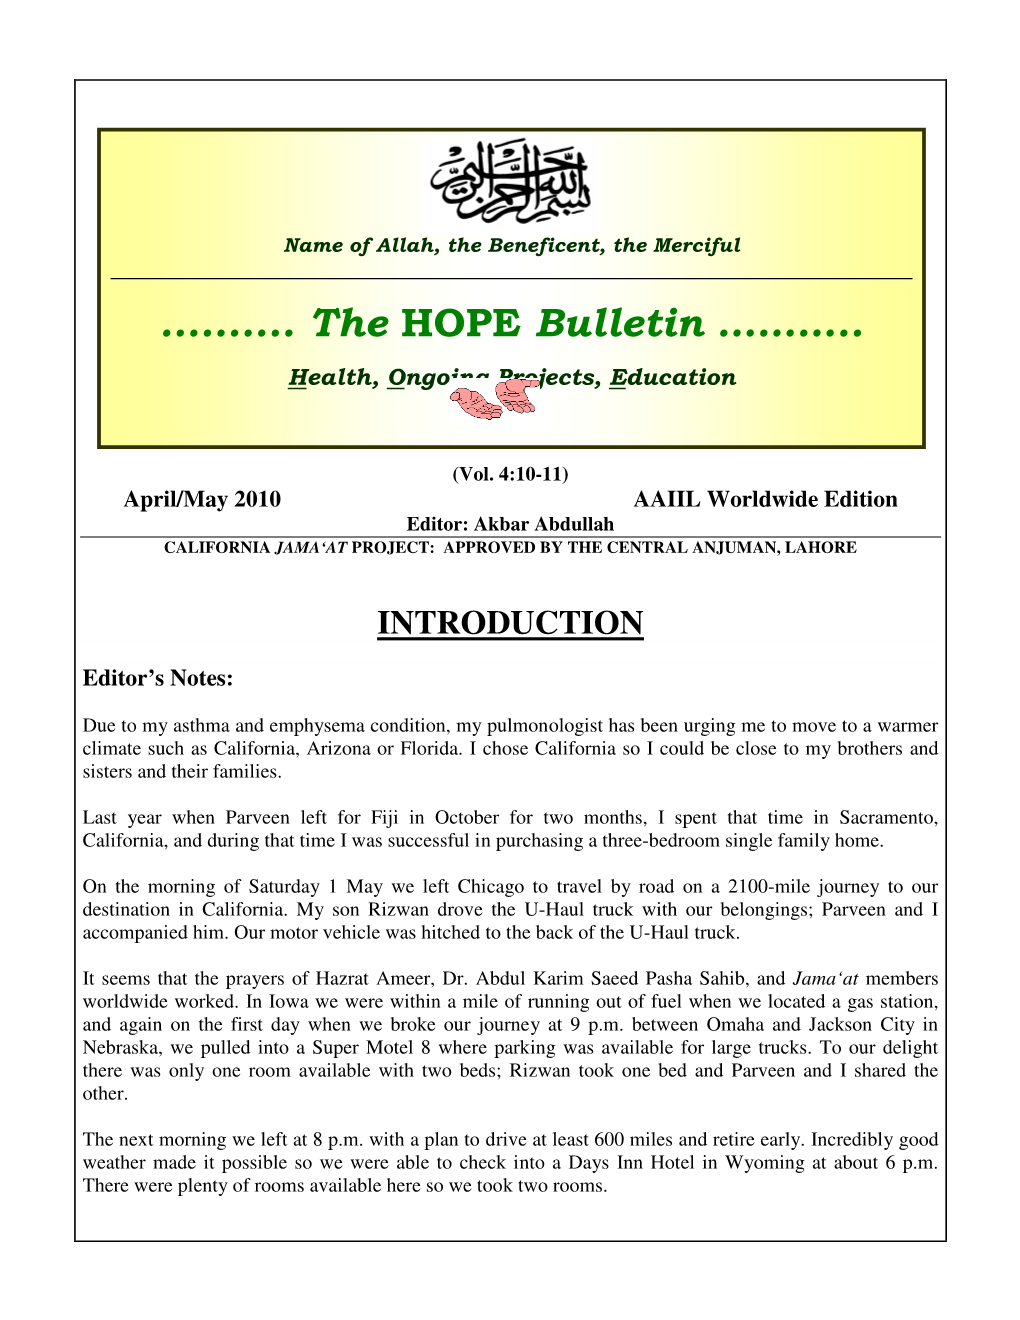 The HOPE Bulletin: April/May 2010 Bulletin —